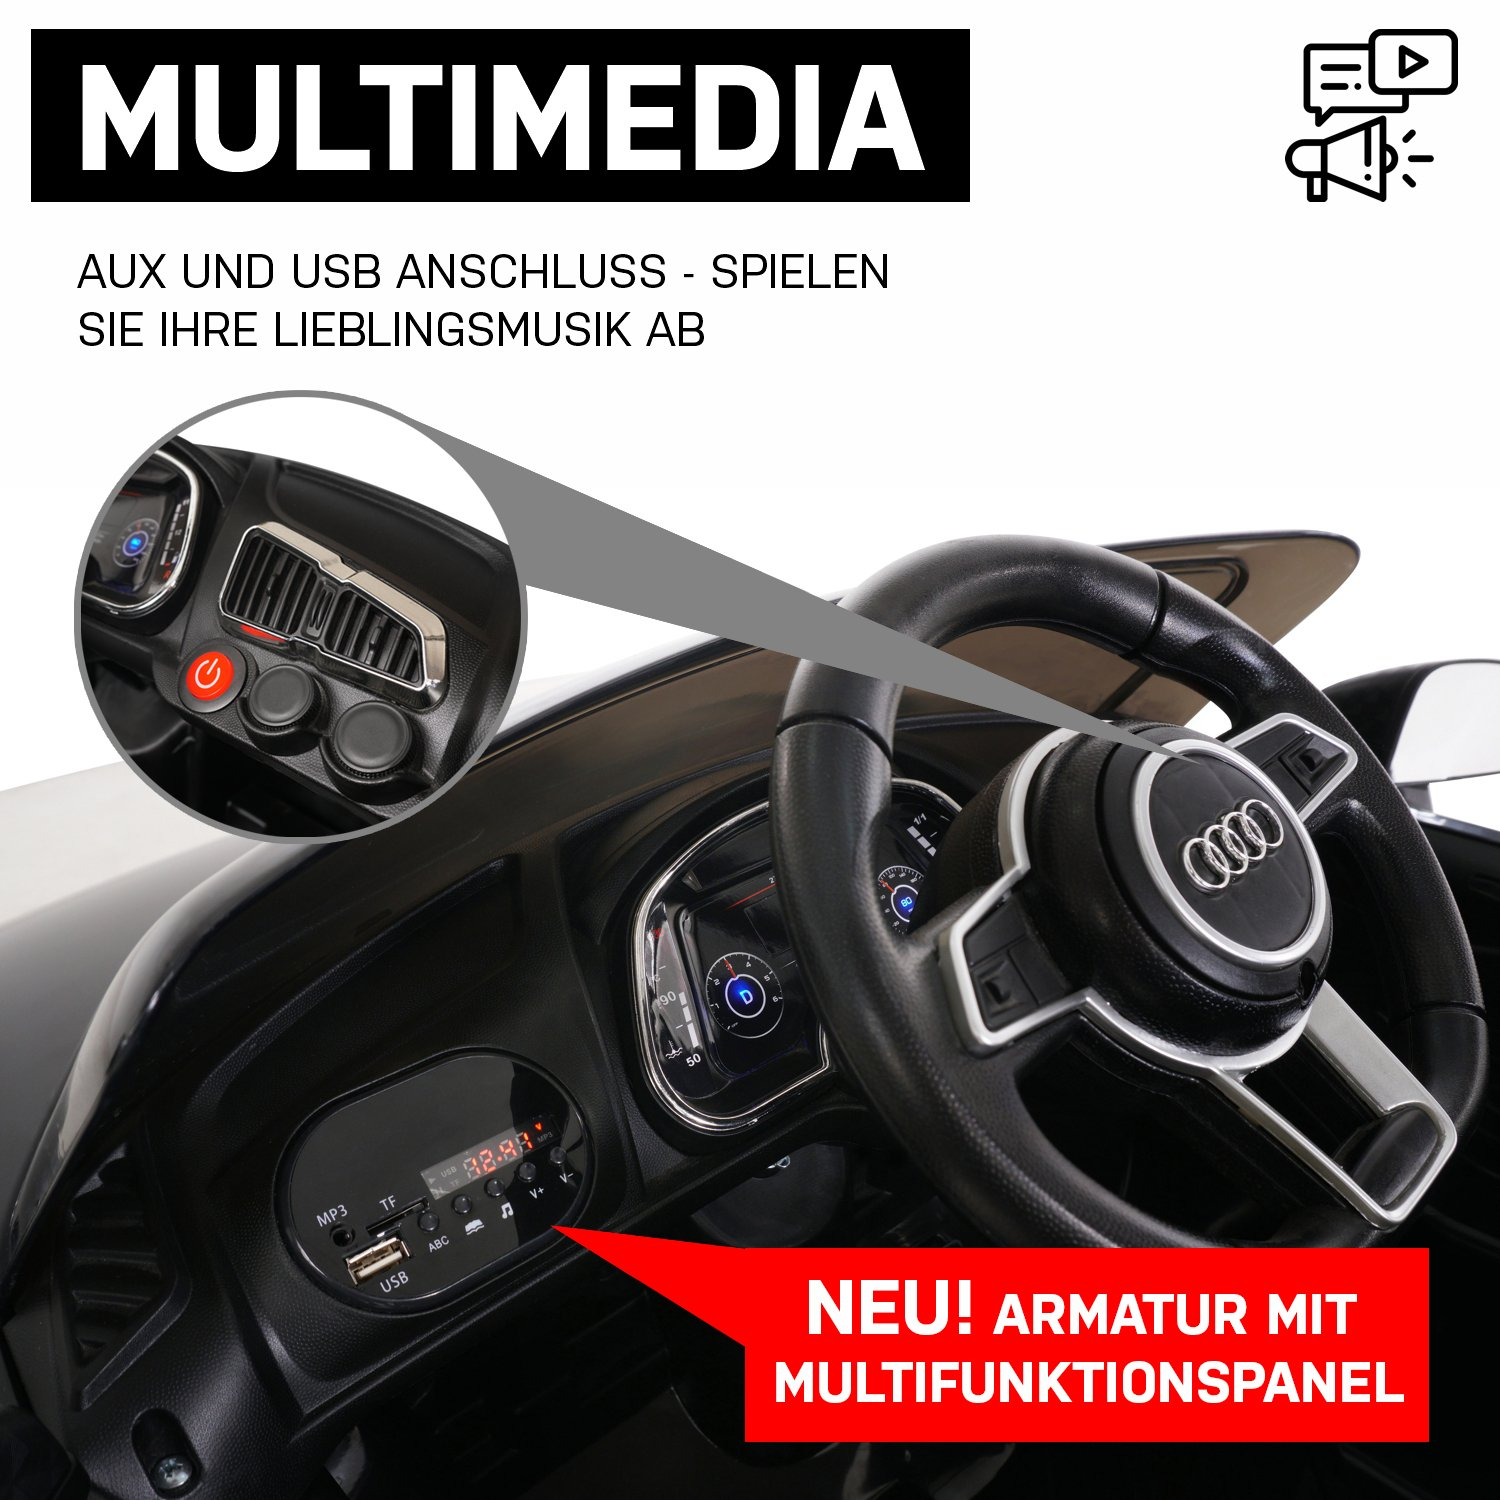 Lizenziert MOTORS ACTIONBIKES Elektroauto Premium 4S R8 Spyder Audi